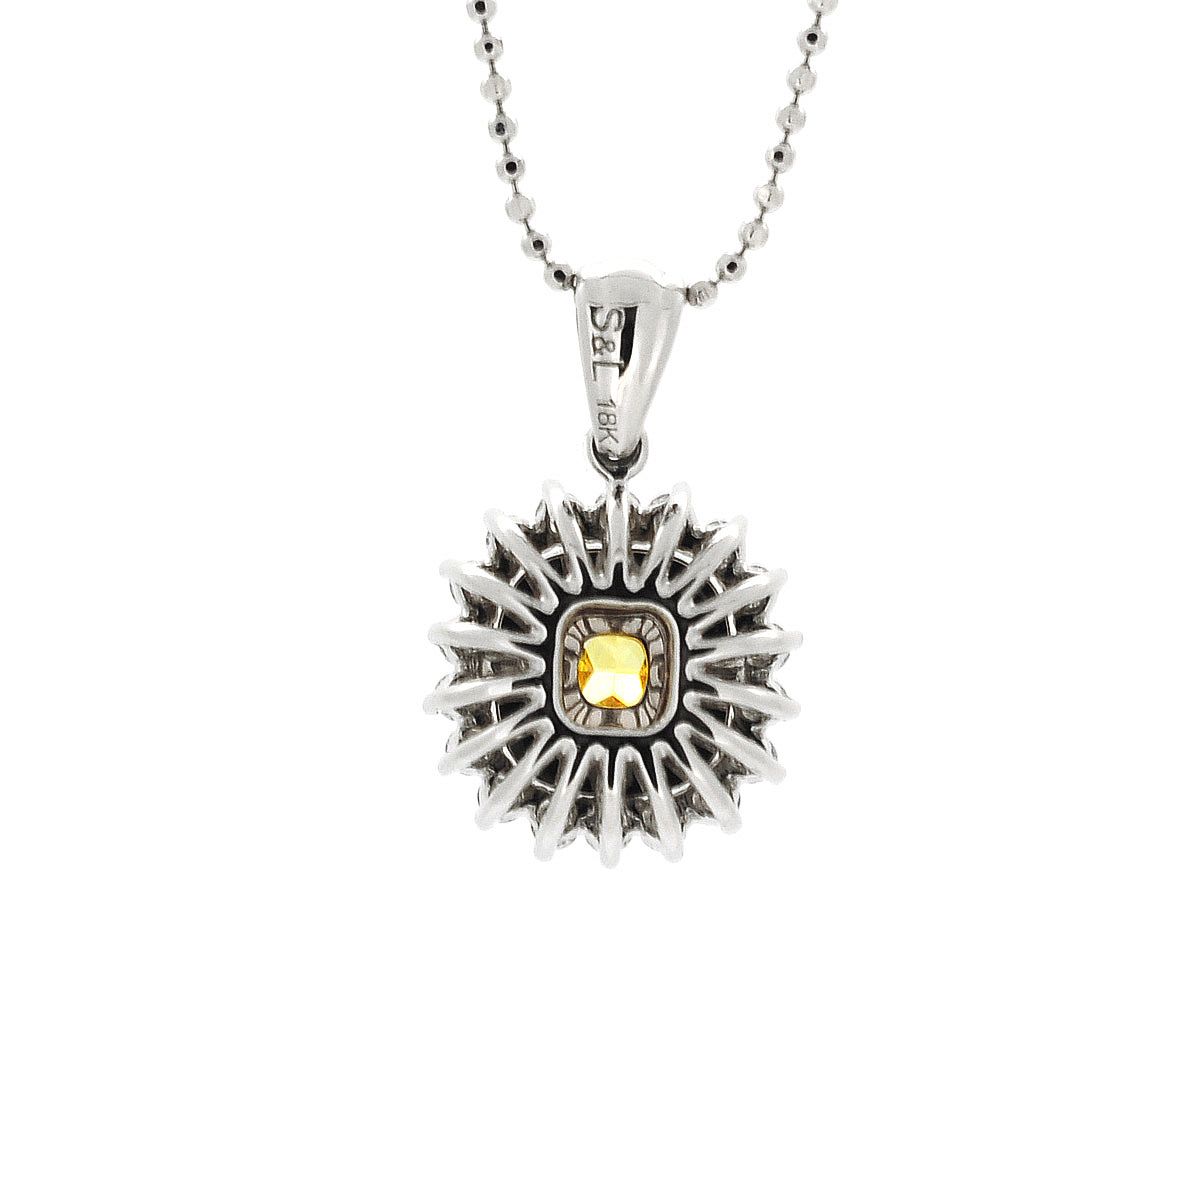 Fancy Vivid Yellow Diamond Necklace, 0.42 Carat, Radiant shape, GIA Certified, 5131614395